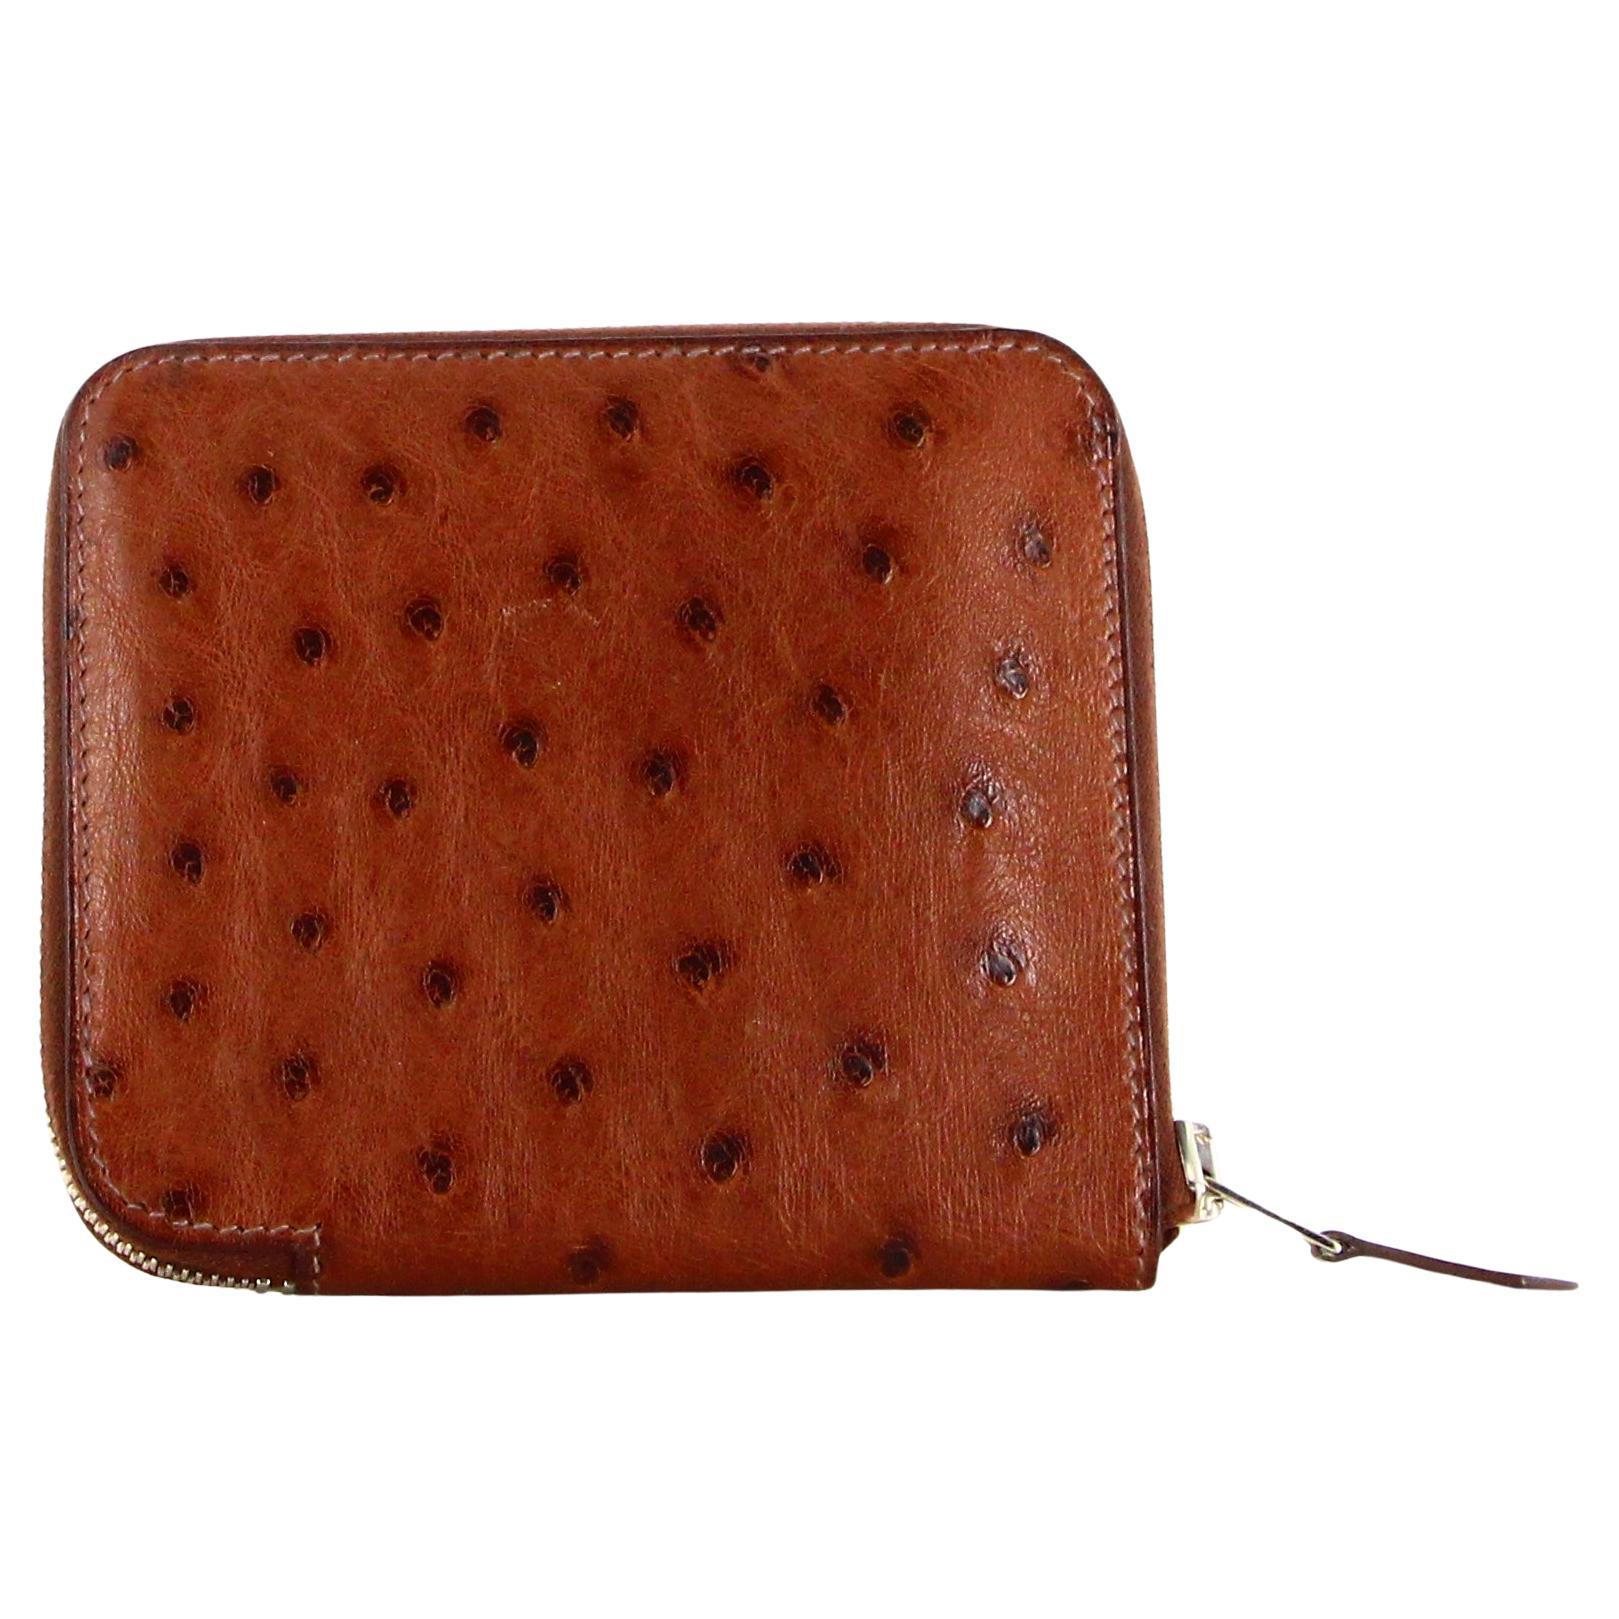 Hermès Brown Leather Purse